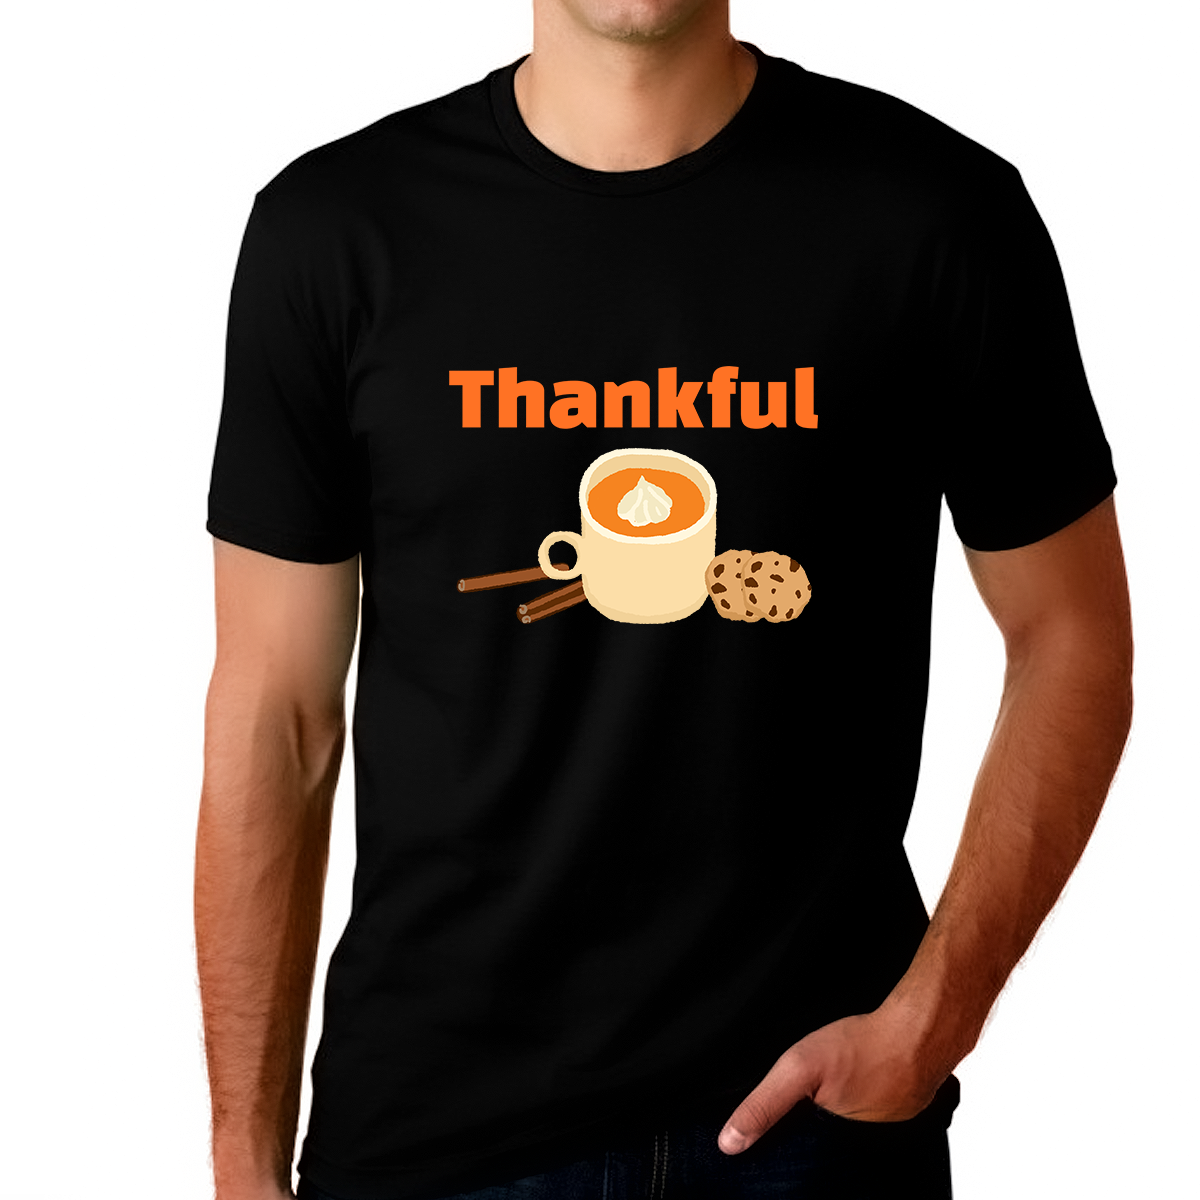 Thanksgiving Shirts for Men Thanksgiving Gifts Fall Shirts Thanksgiving Outfit Cool Thanksgiving Shirt